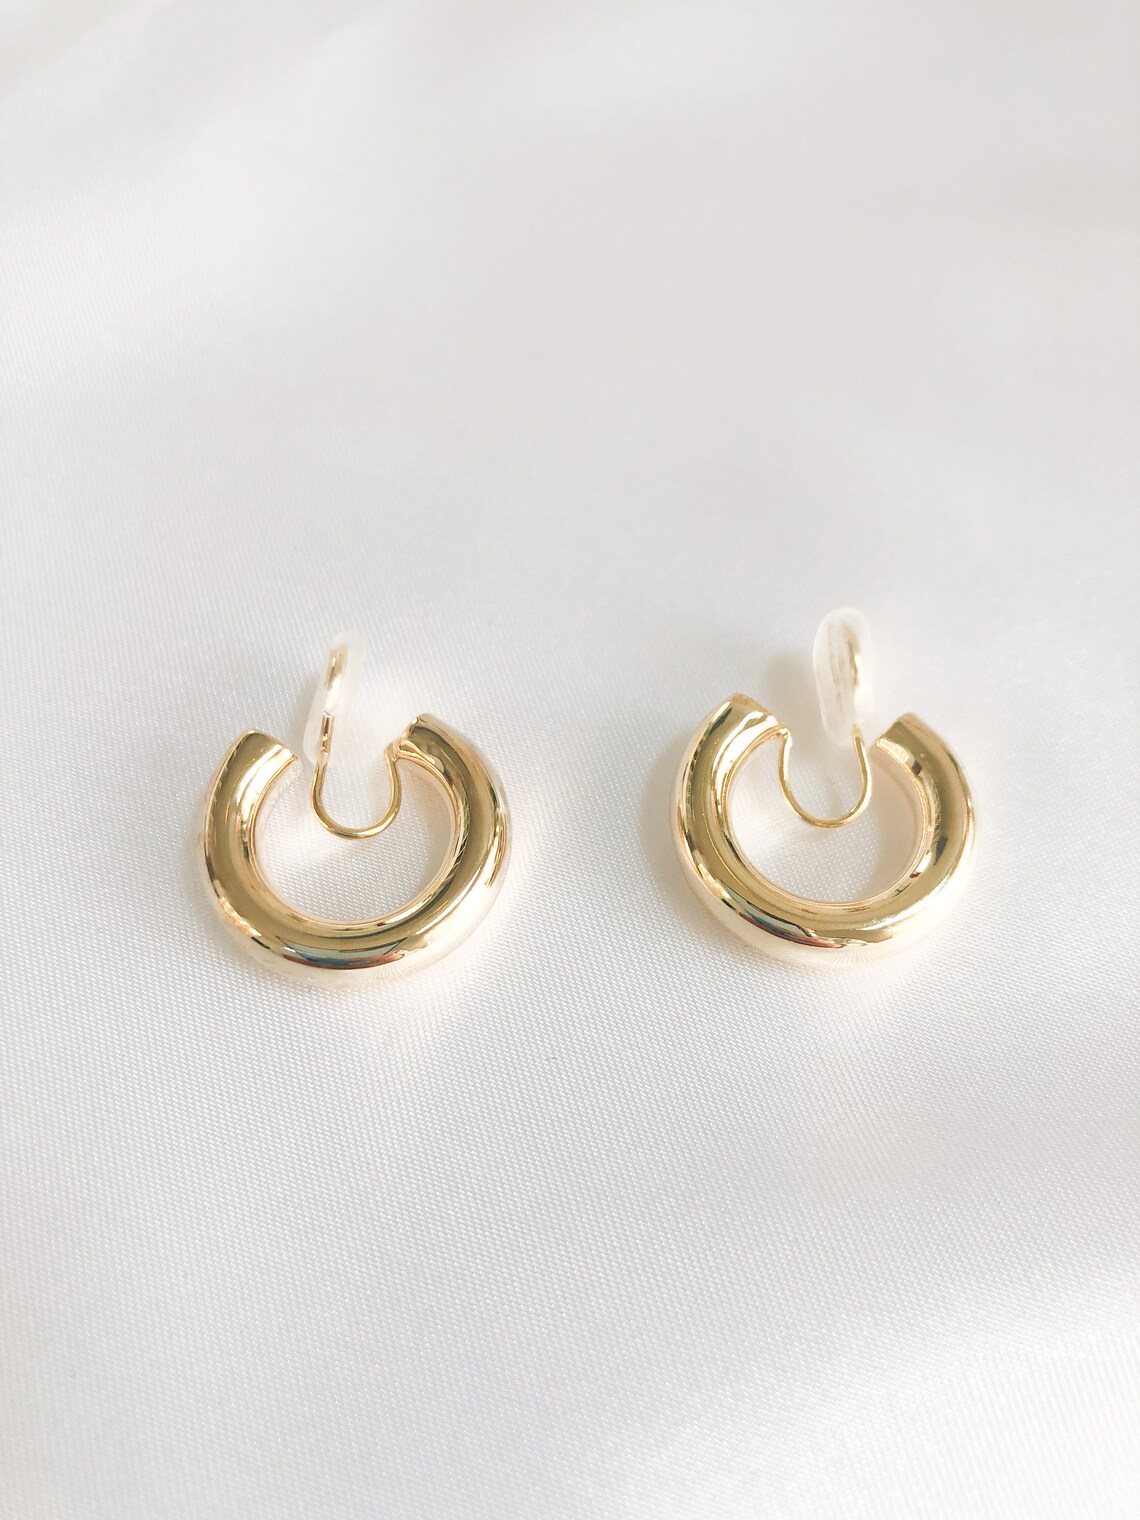 Gold Clip-on Hoop Earrings Clip-on Earrings Clip-on Hoop - Etsy